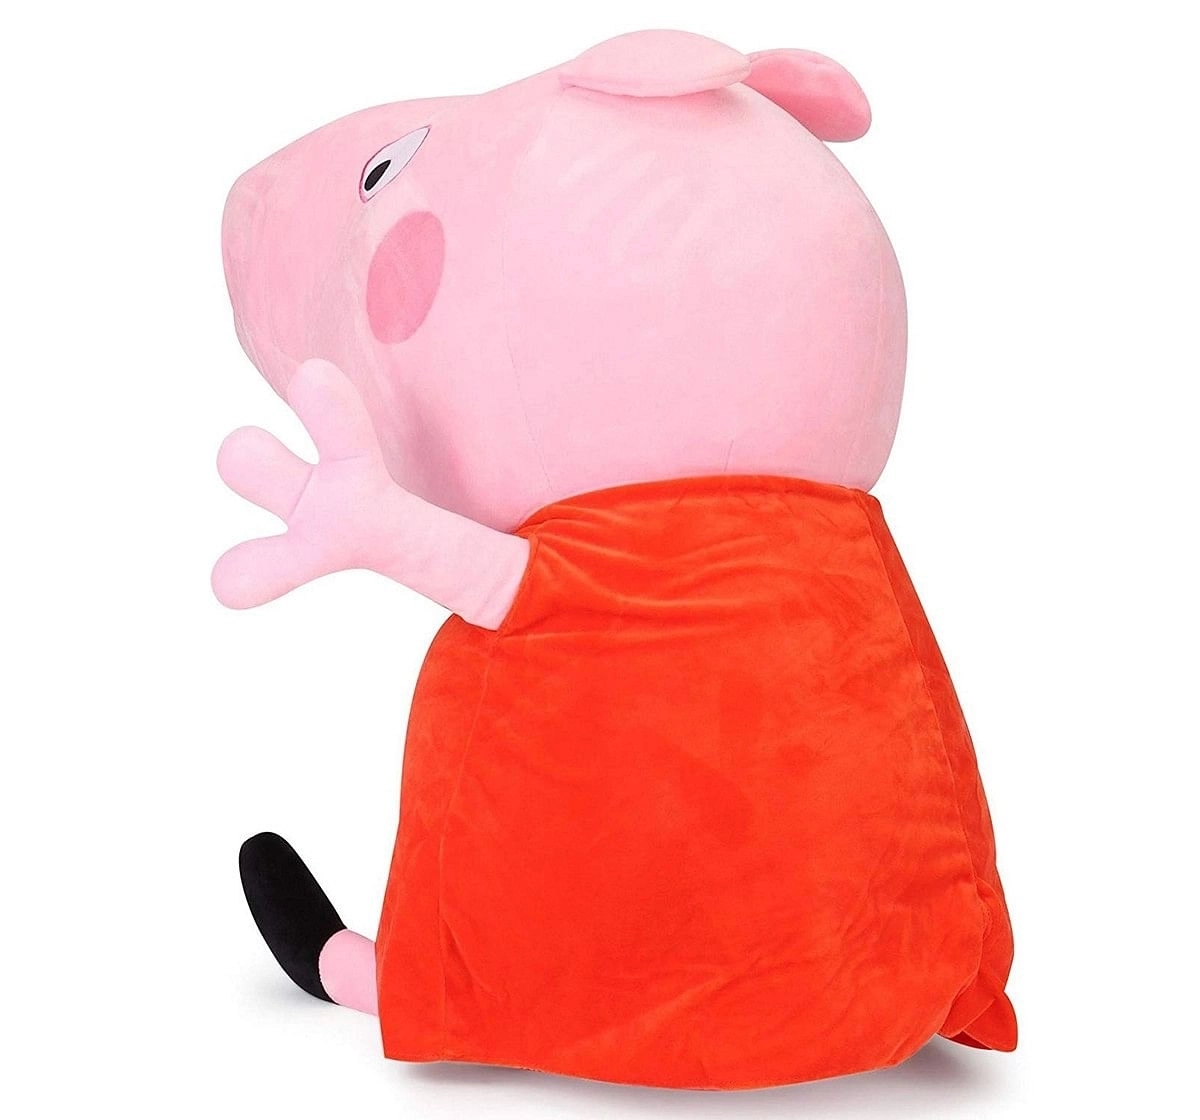 Peppa George Pig  Multi Color 46 Cm Soft Toy for Kids age 0M+ (Orange)